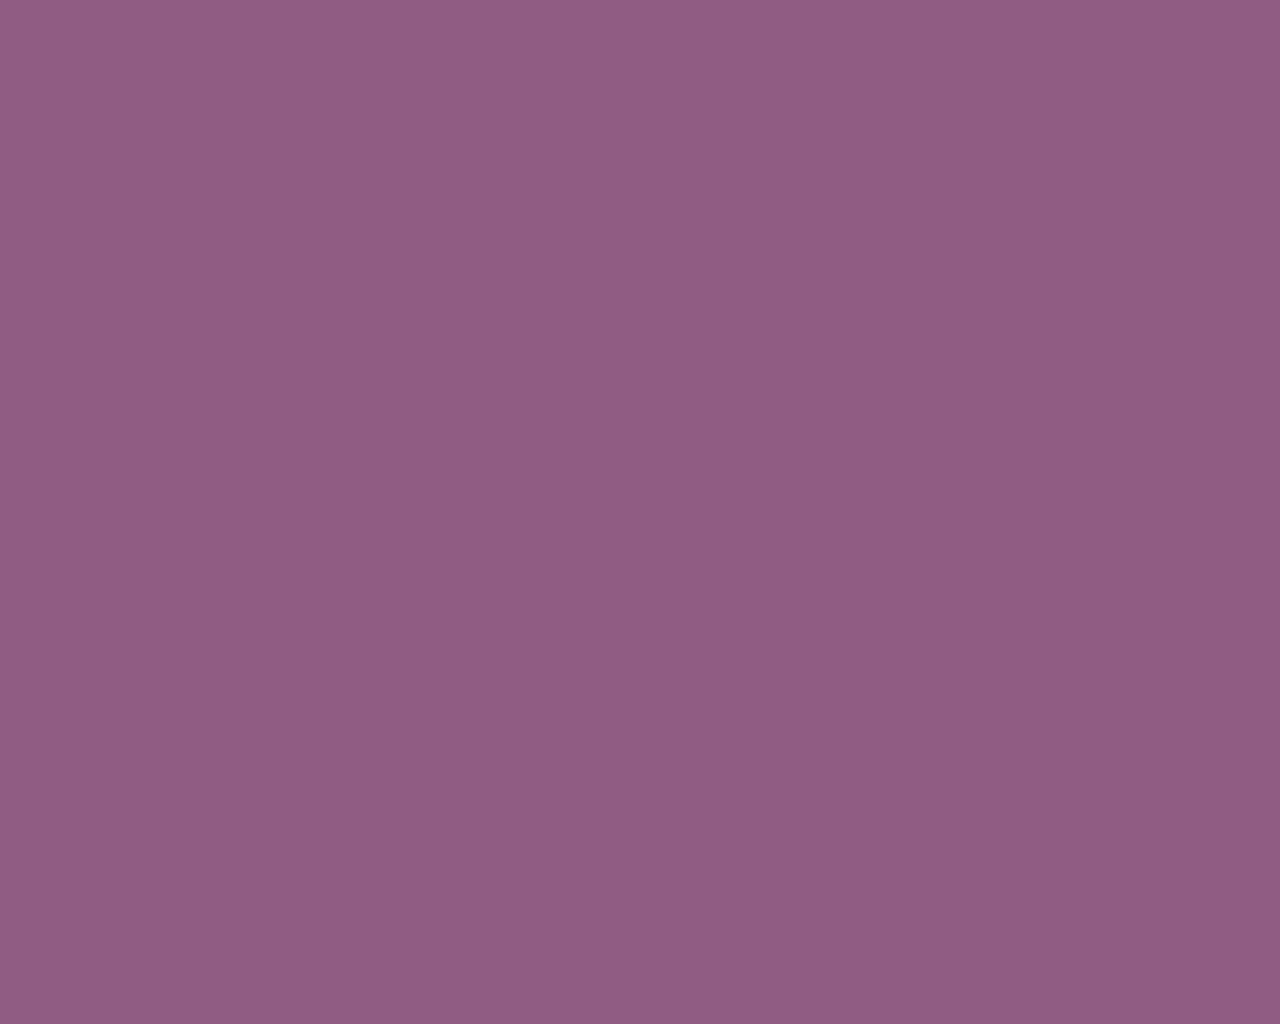 1280x1024 Antique Fuchsia Solid Color Background